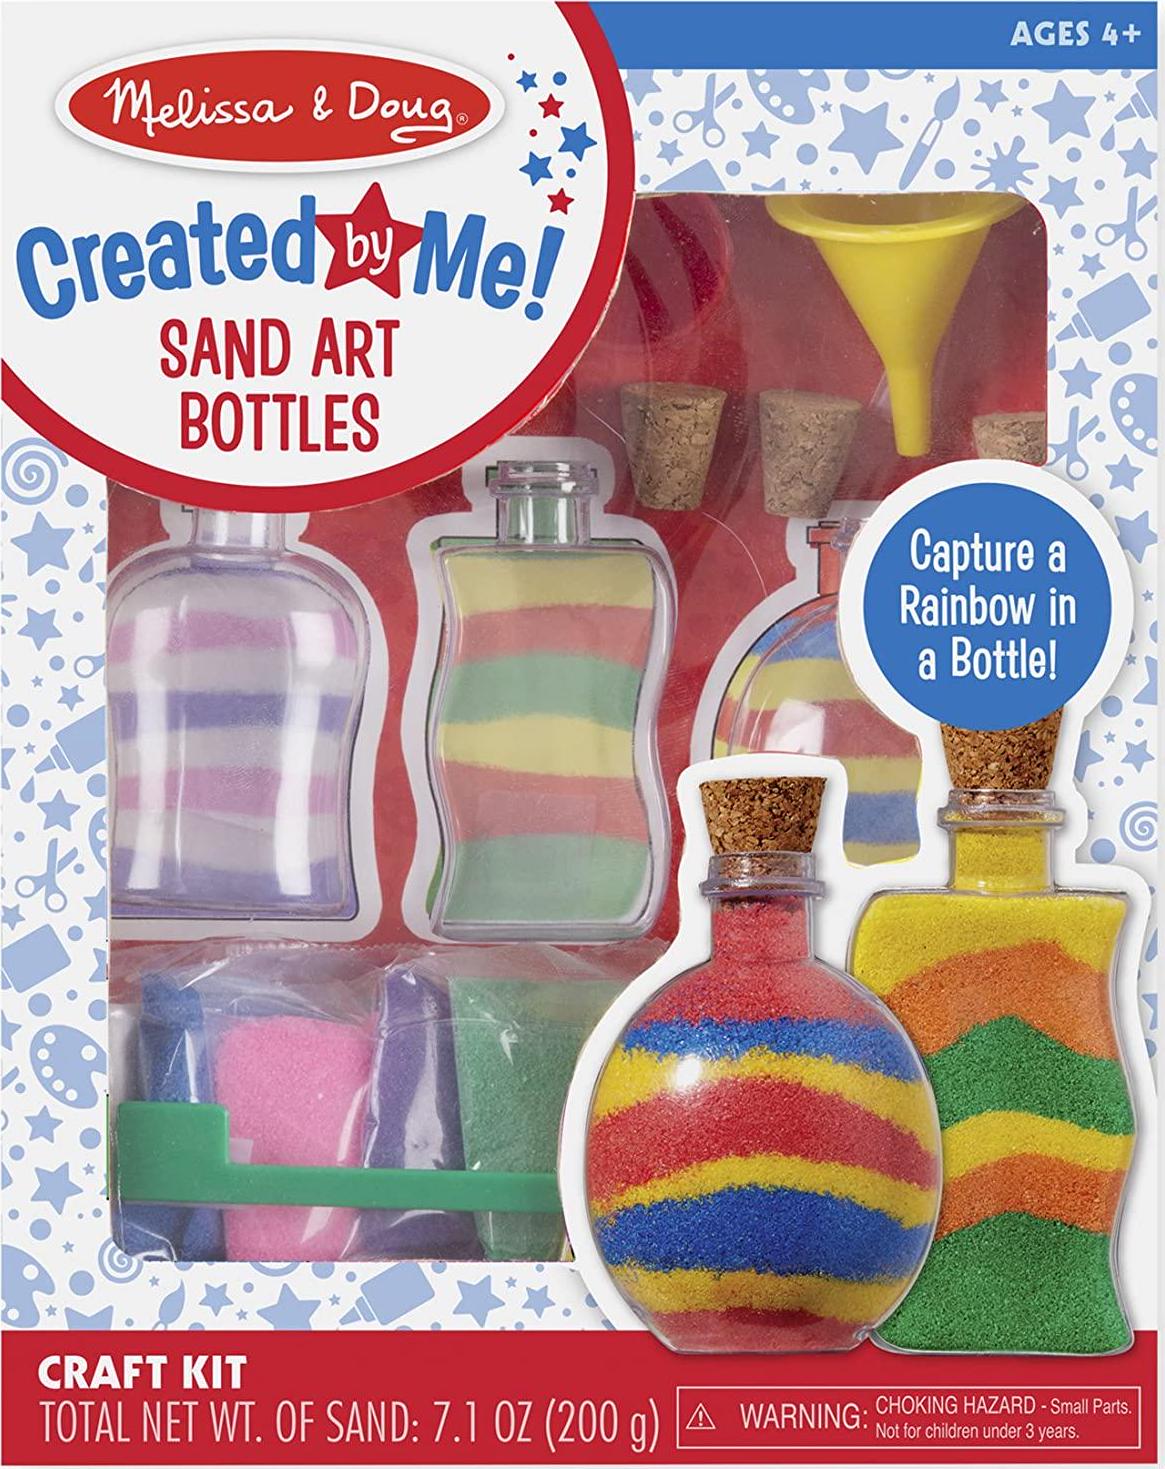 Melissa & Doug, Melissa and Doug 4232 Sand Art Bottles Craft Kit: 3 Bottles, 6 Bags of Colored Sand, Design Tool